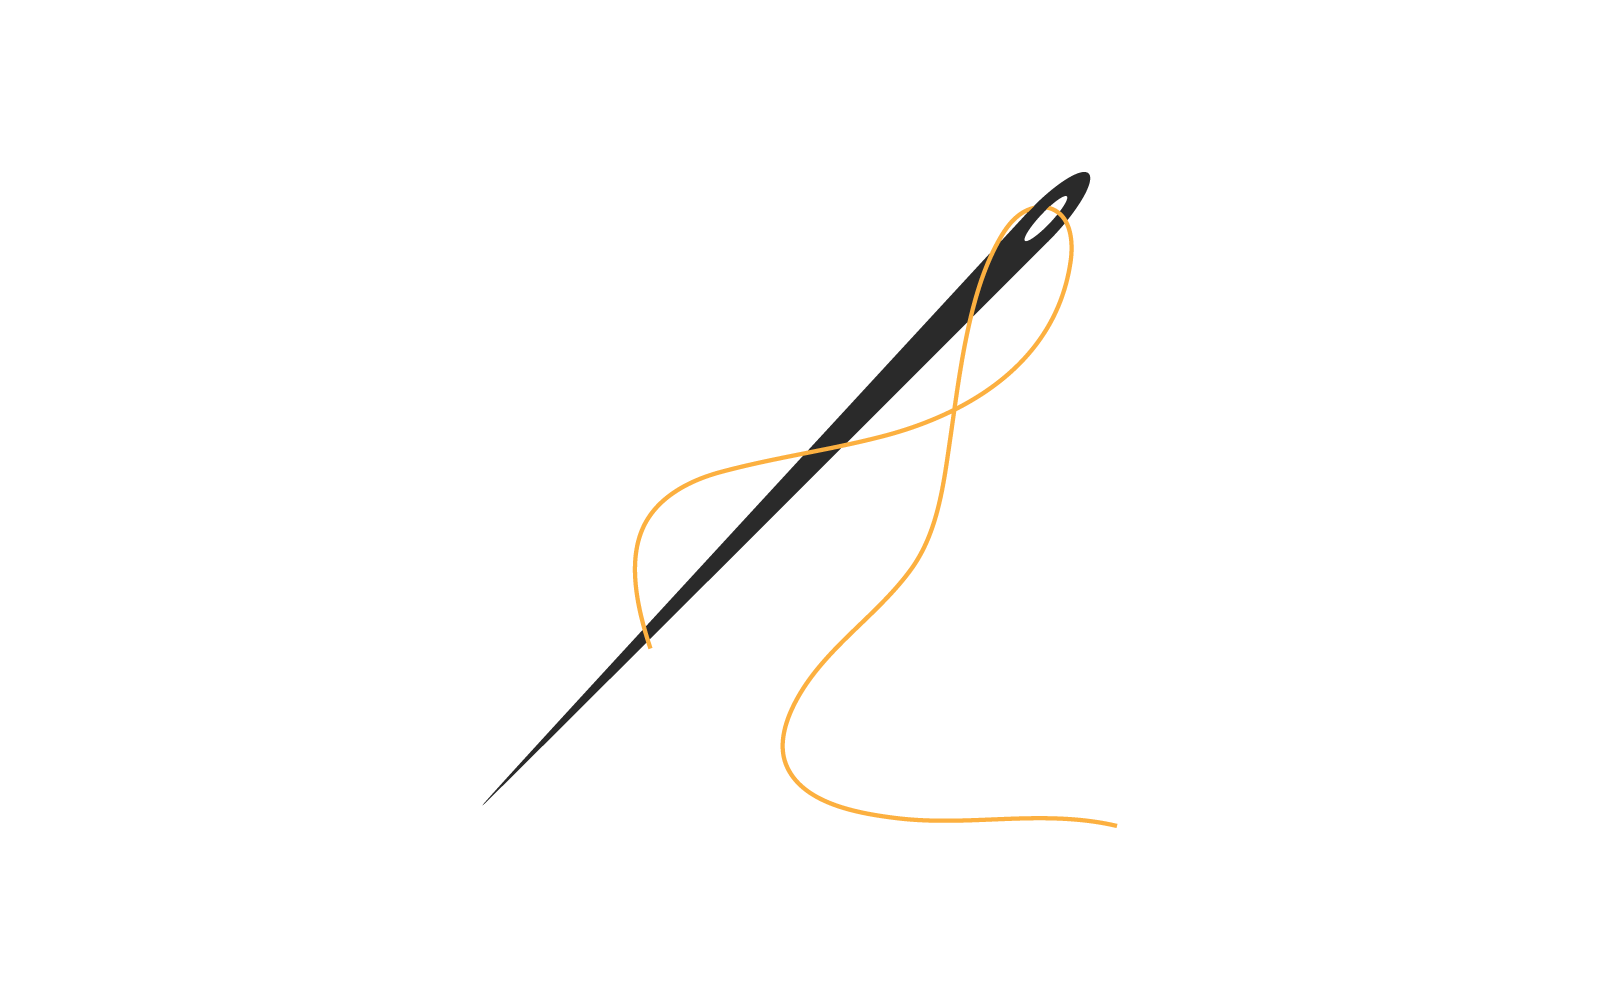 Thread needle illustration vector flat design template